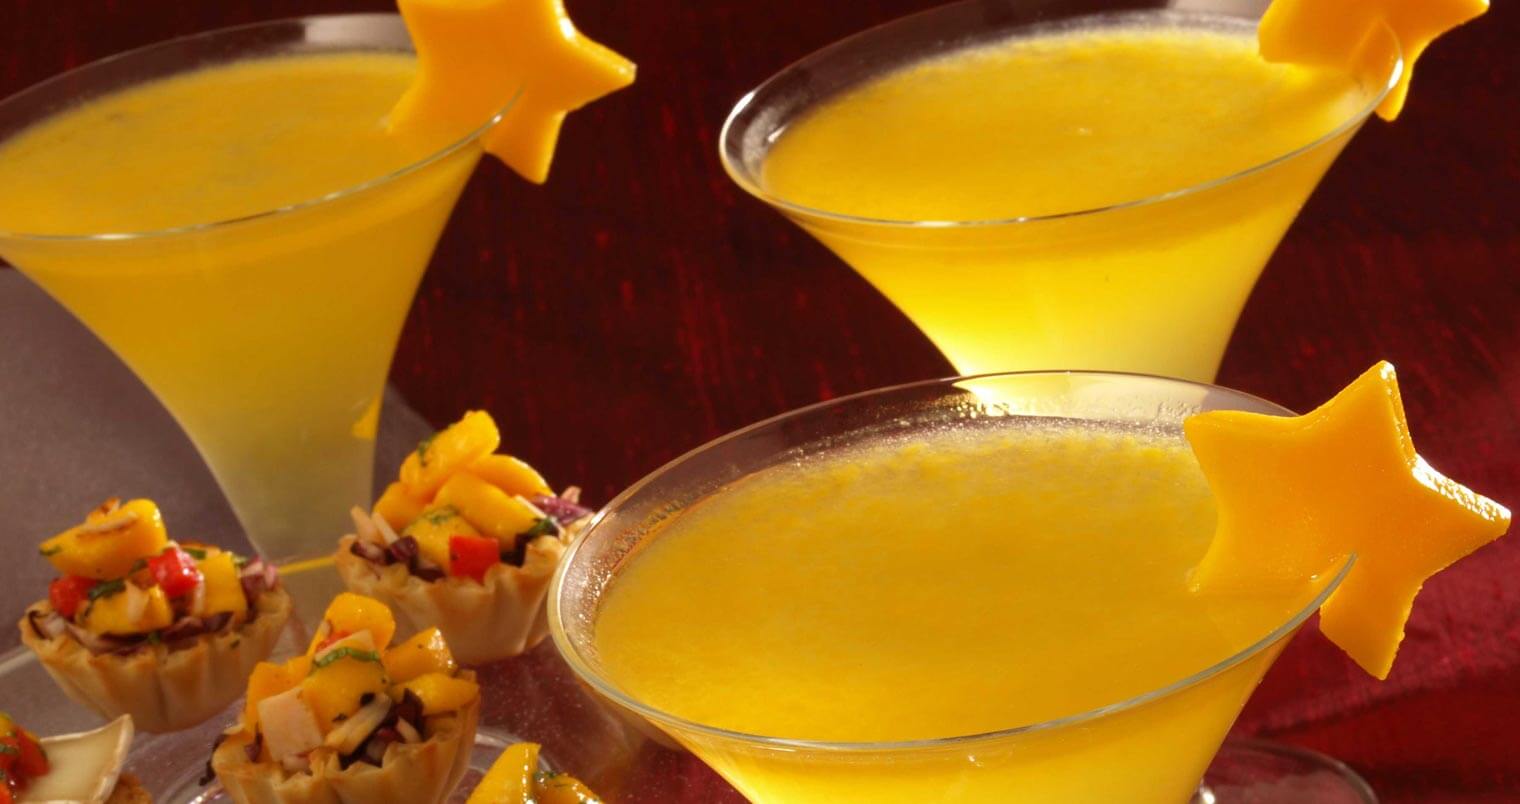 Mango Bellini cocktails with star mango garnish, featured image